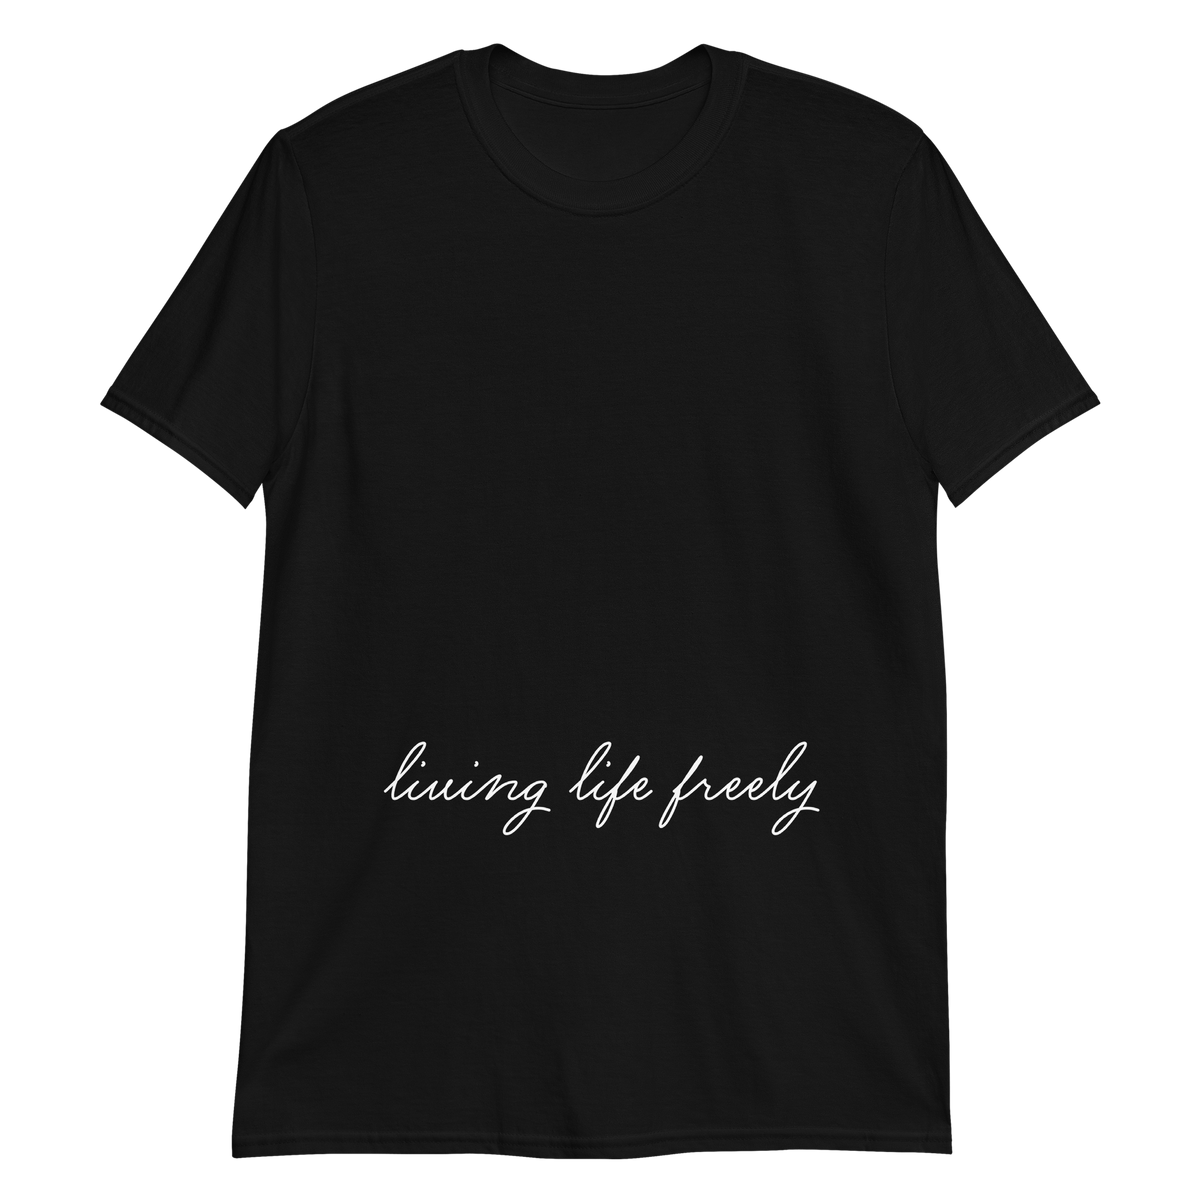 Living life freely t-shirt